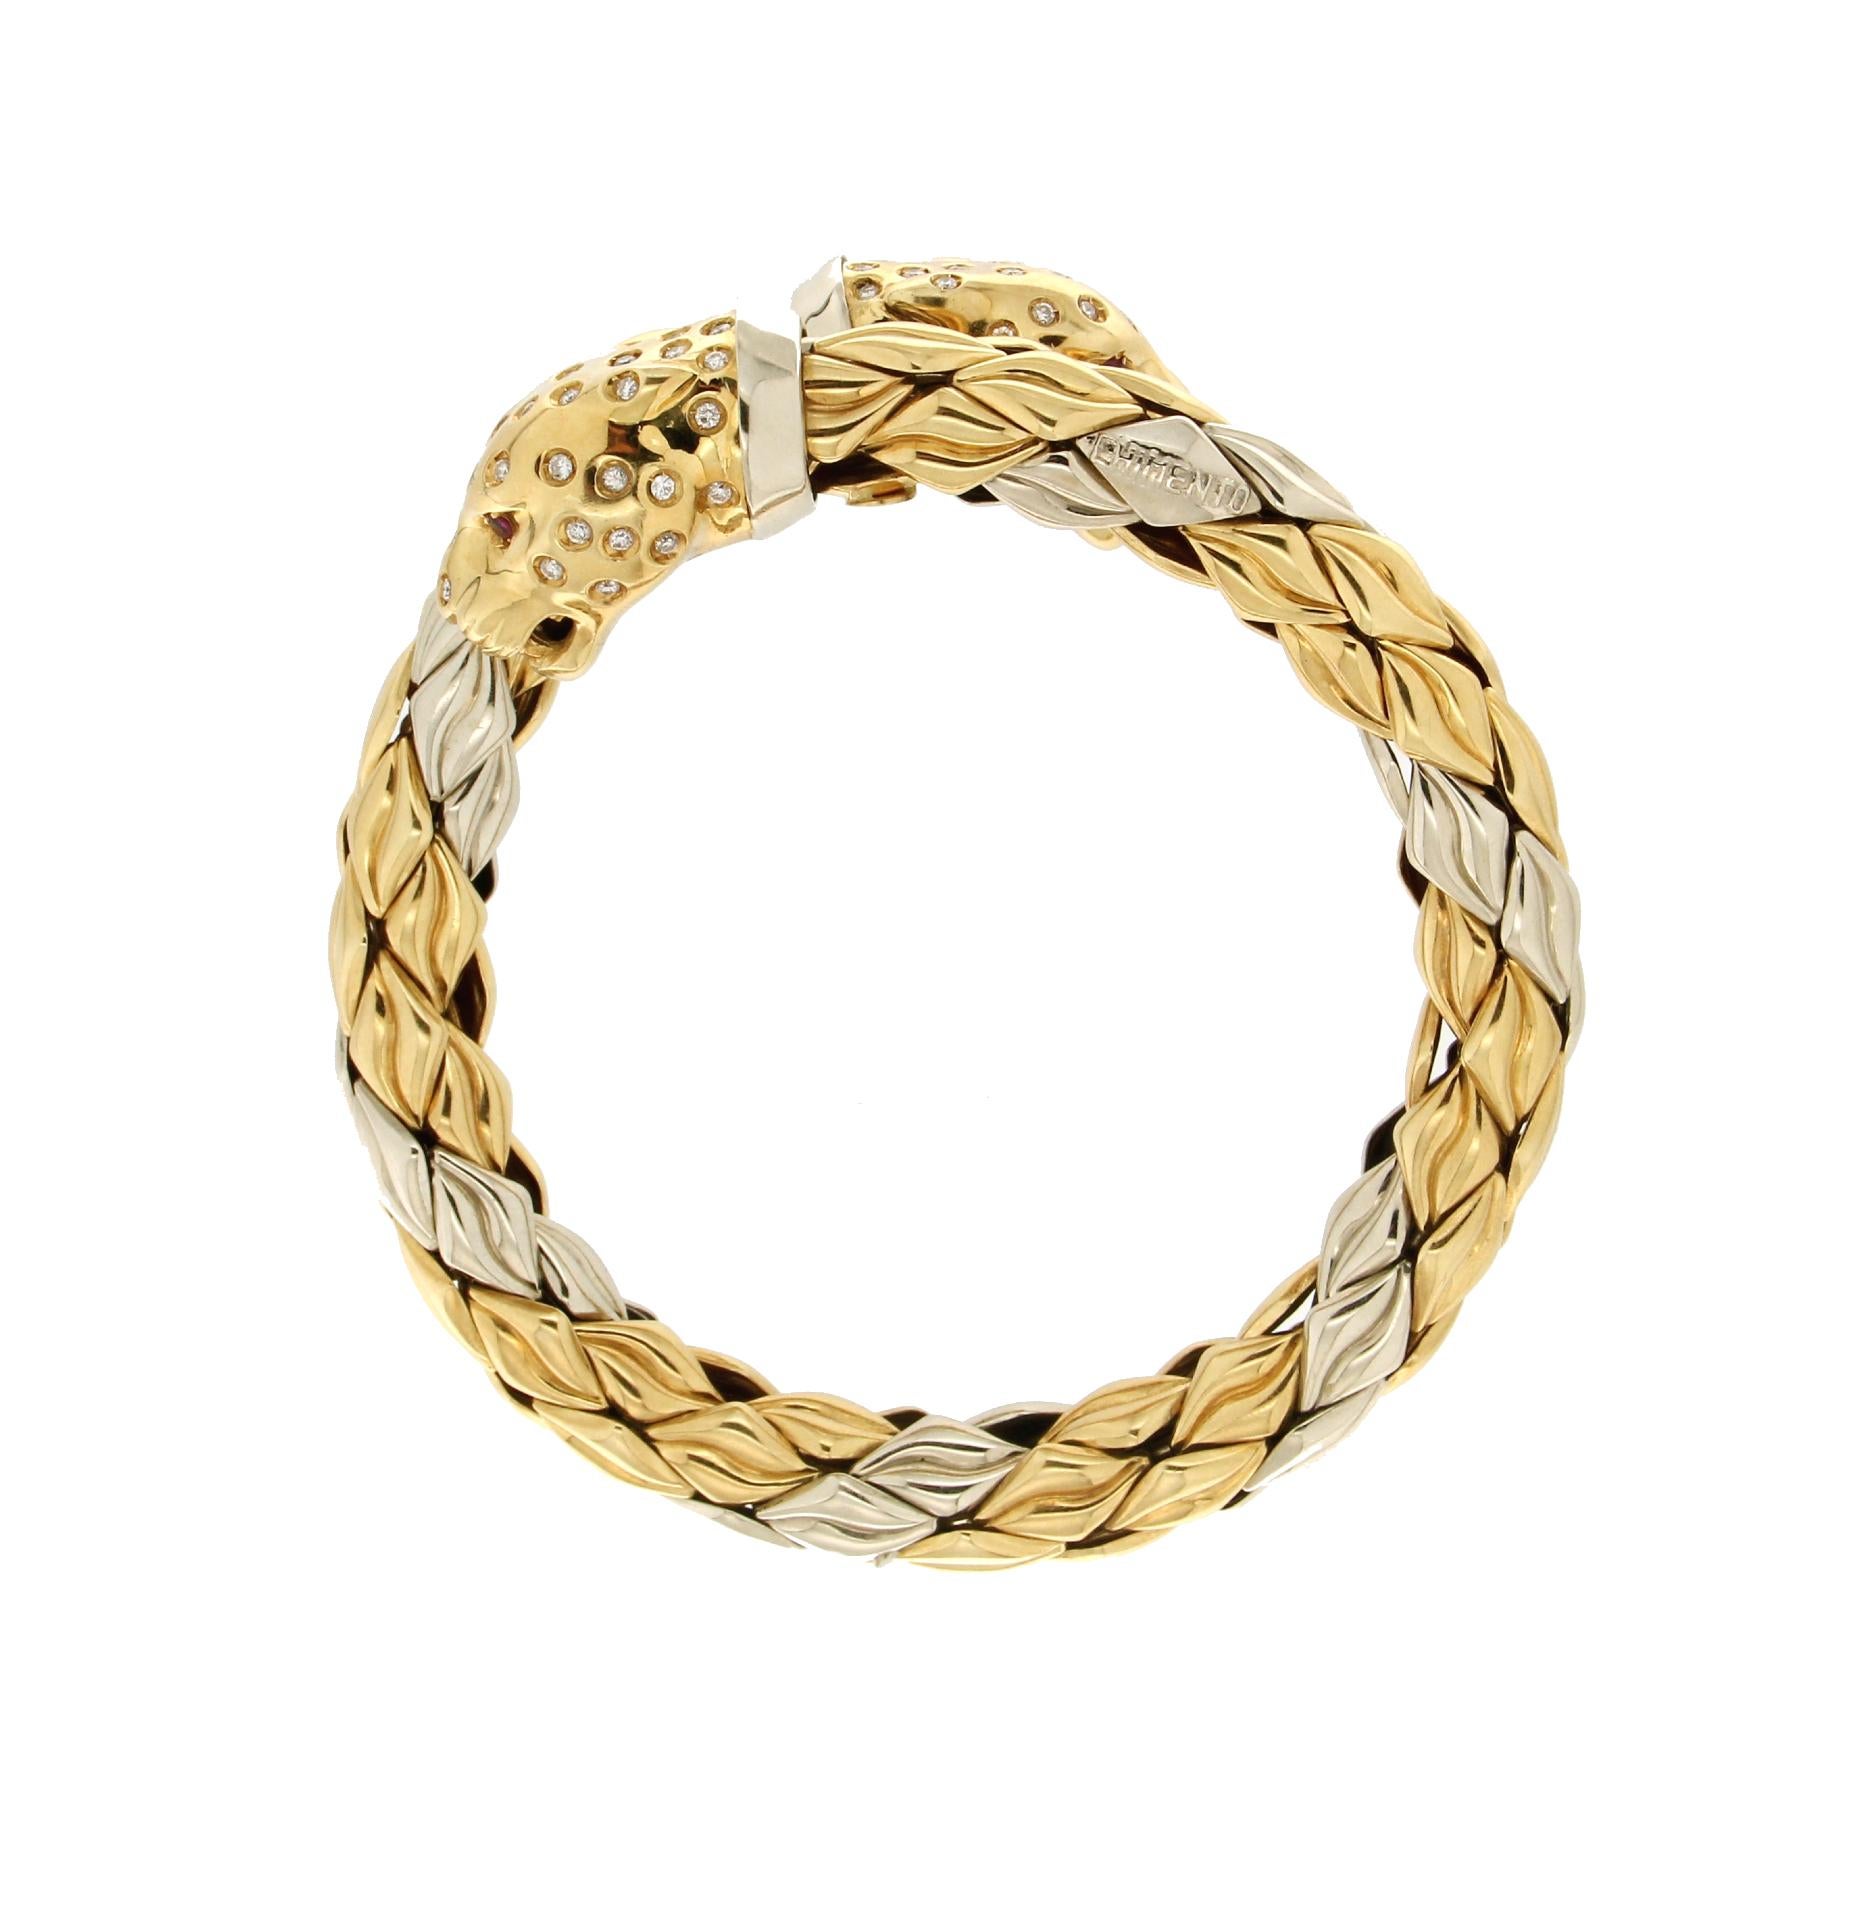 Modern Chimento Italy 18 Karat Yellow and White Gold Diamonds Bangle Bracelet